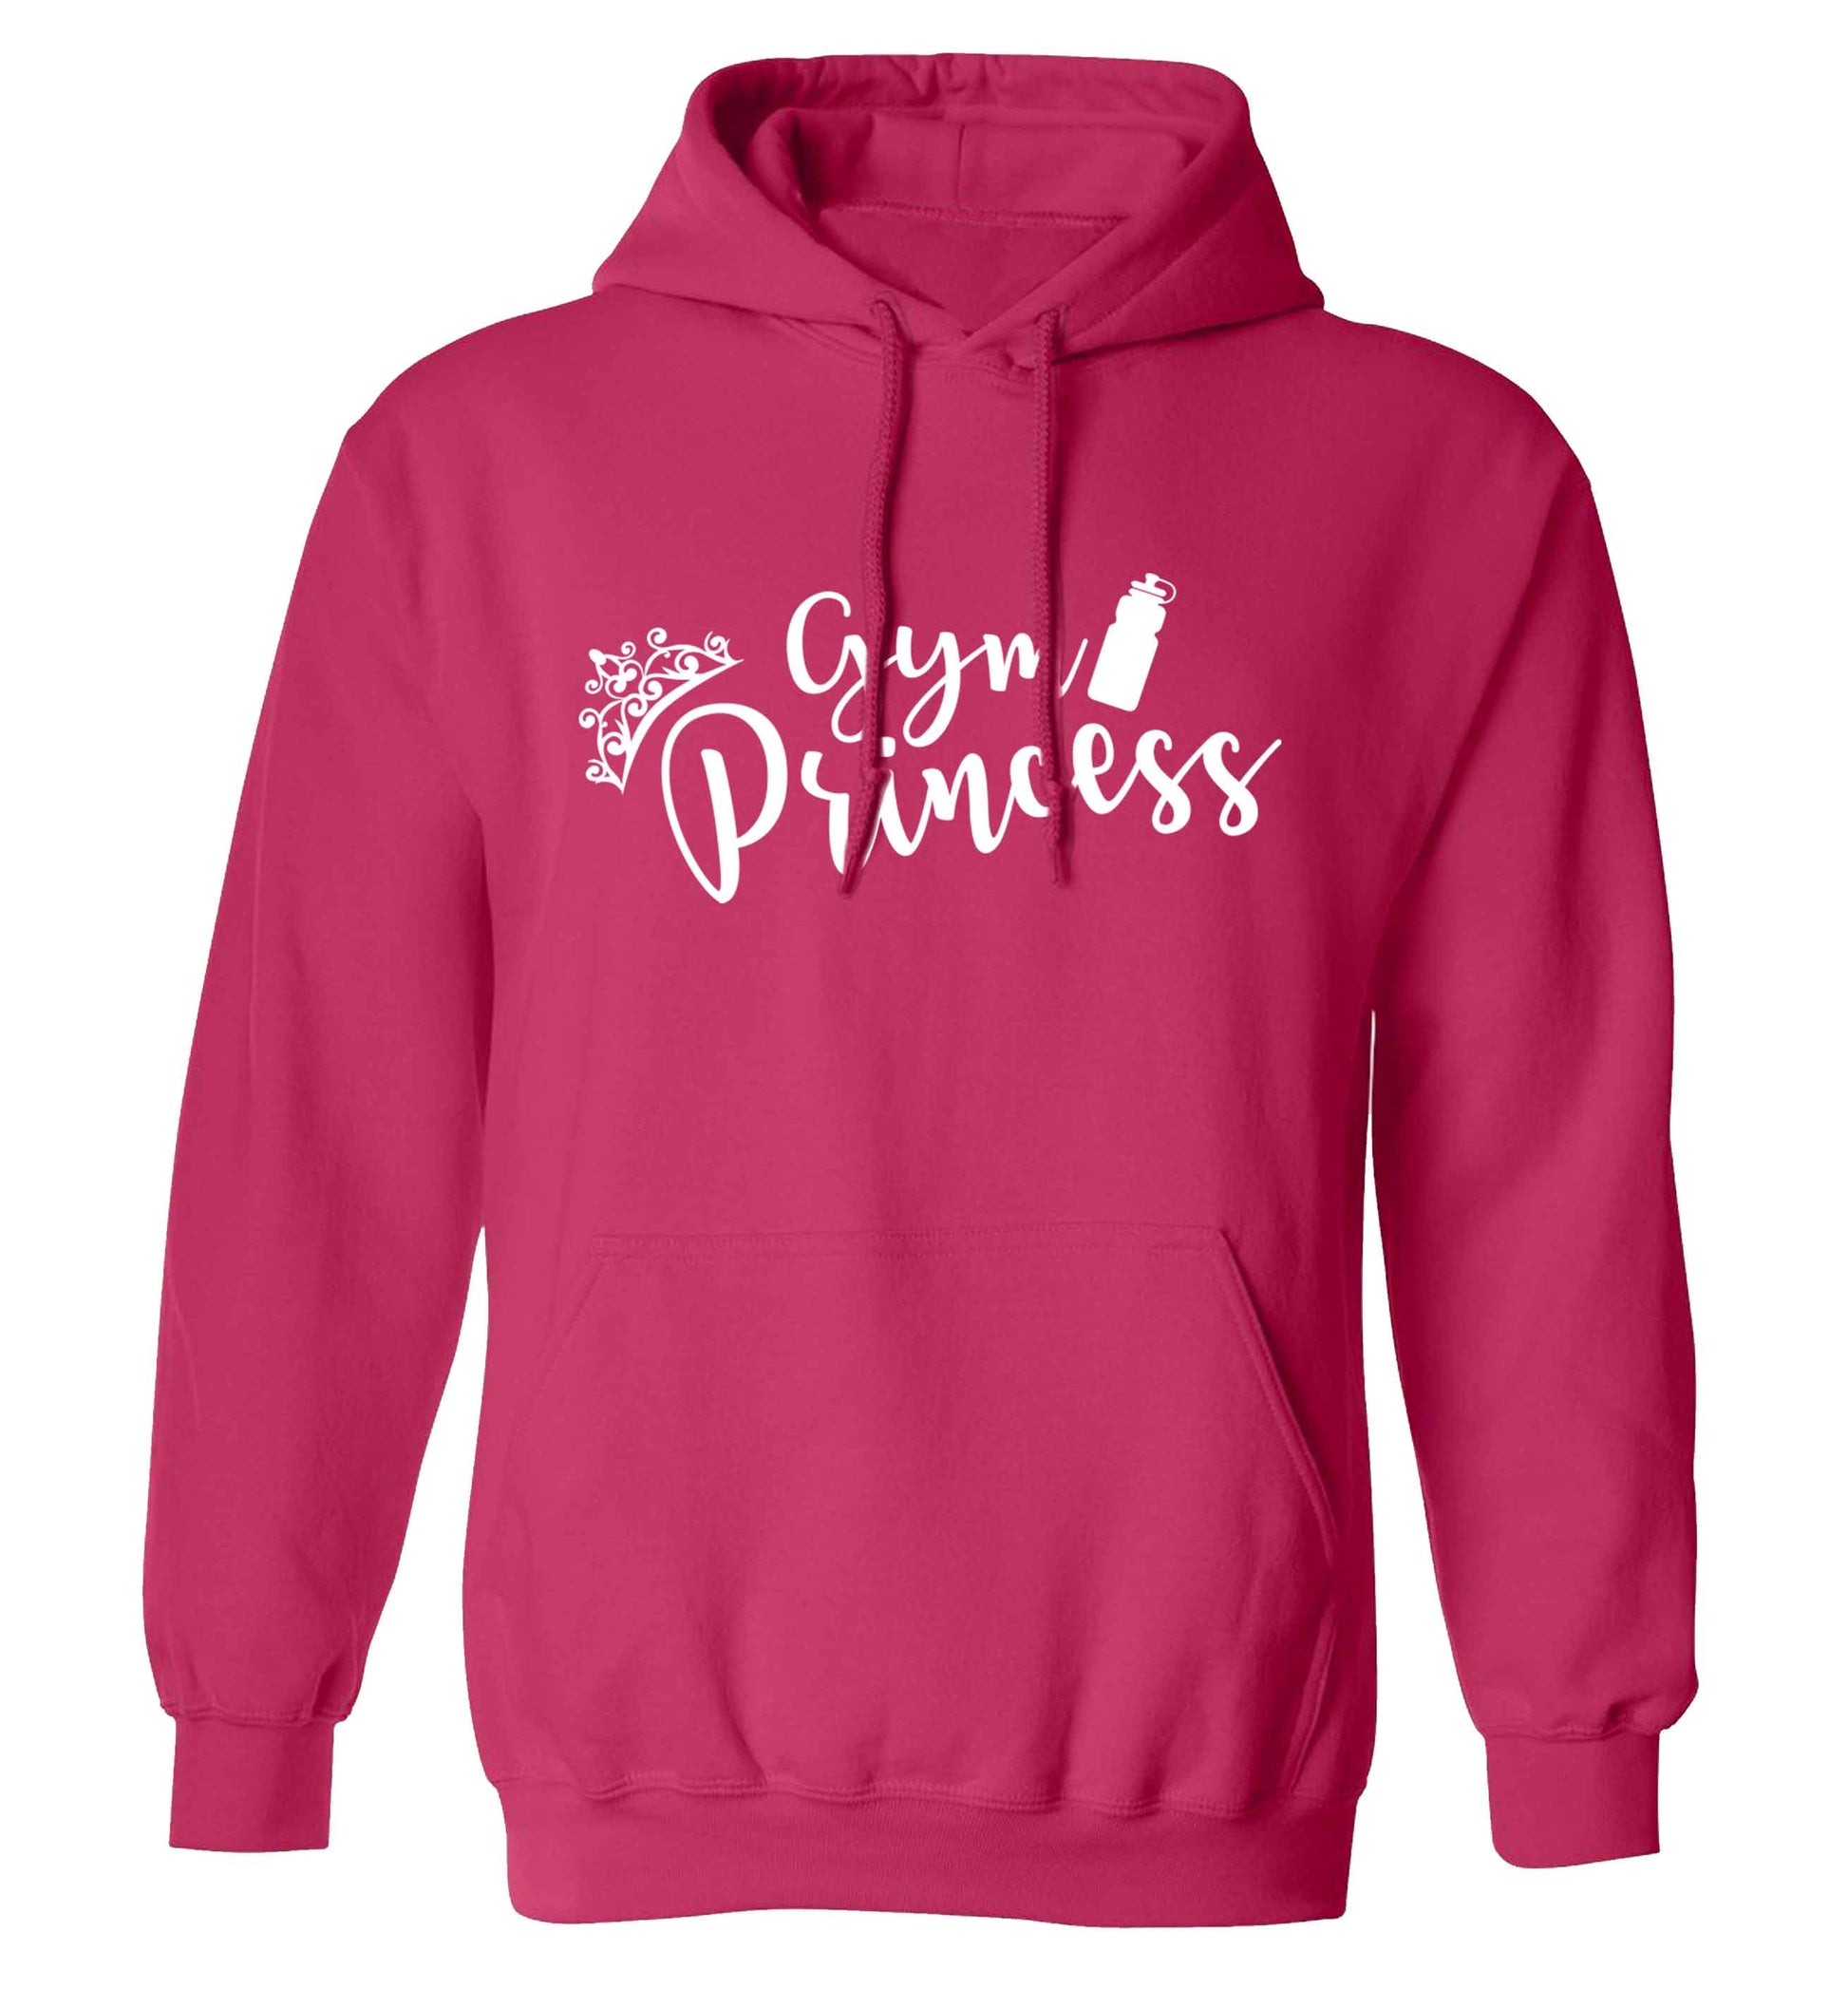 Gym princess adults unisex pink hoodie 2XL